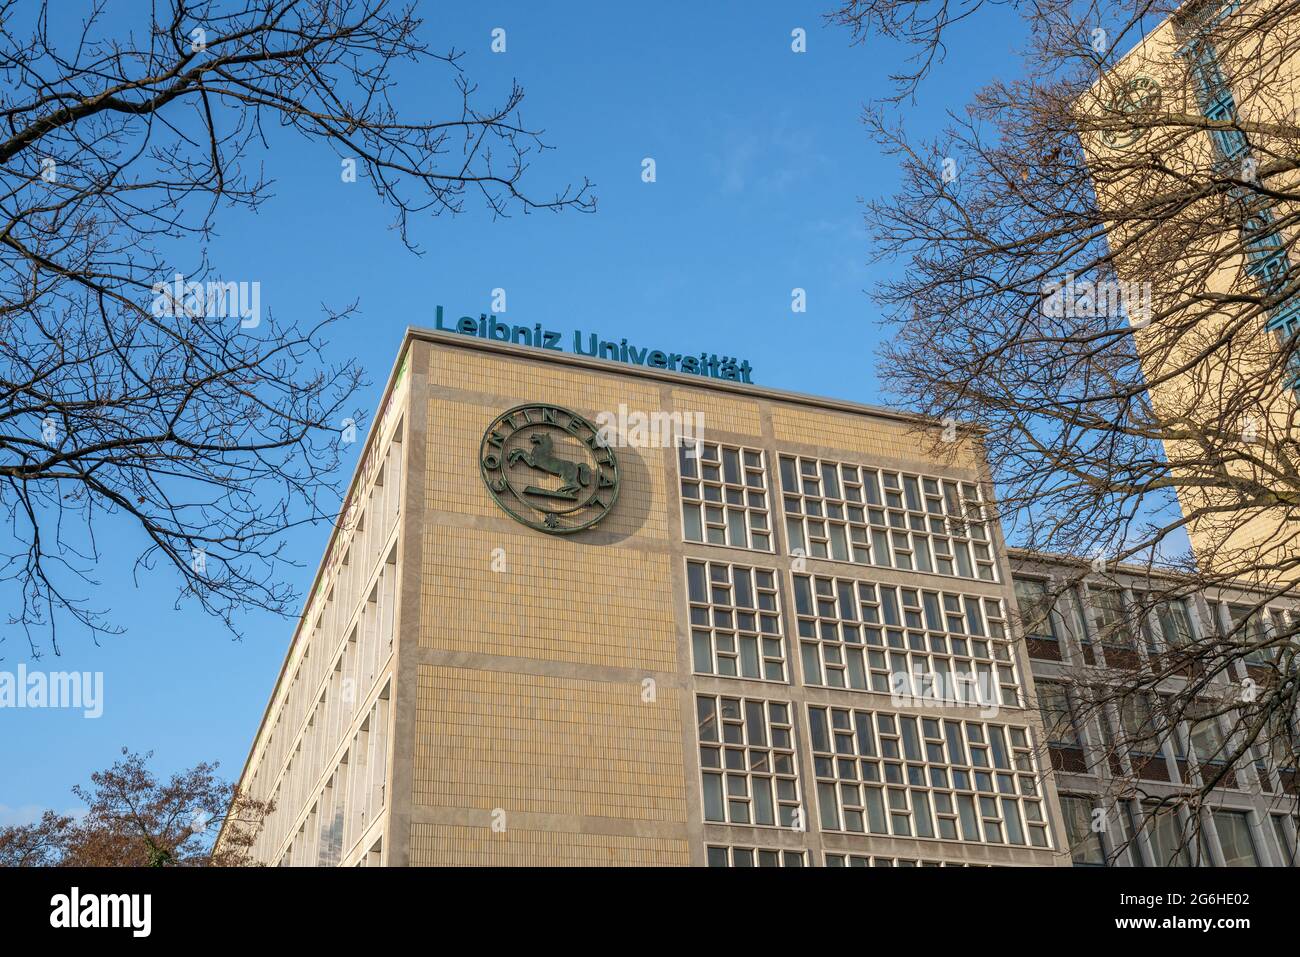 Leibniz University - Conti-Campus Building - Hanover, Germany Stock Photo